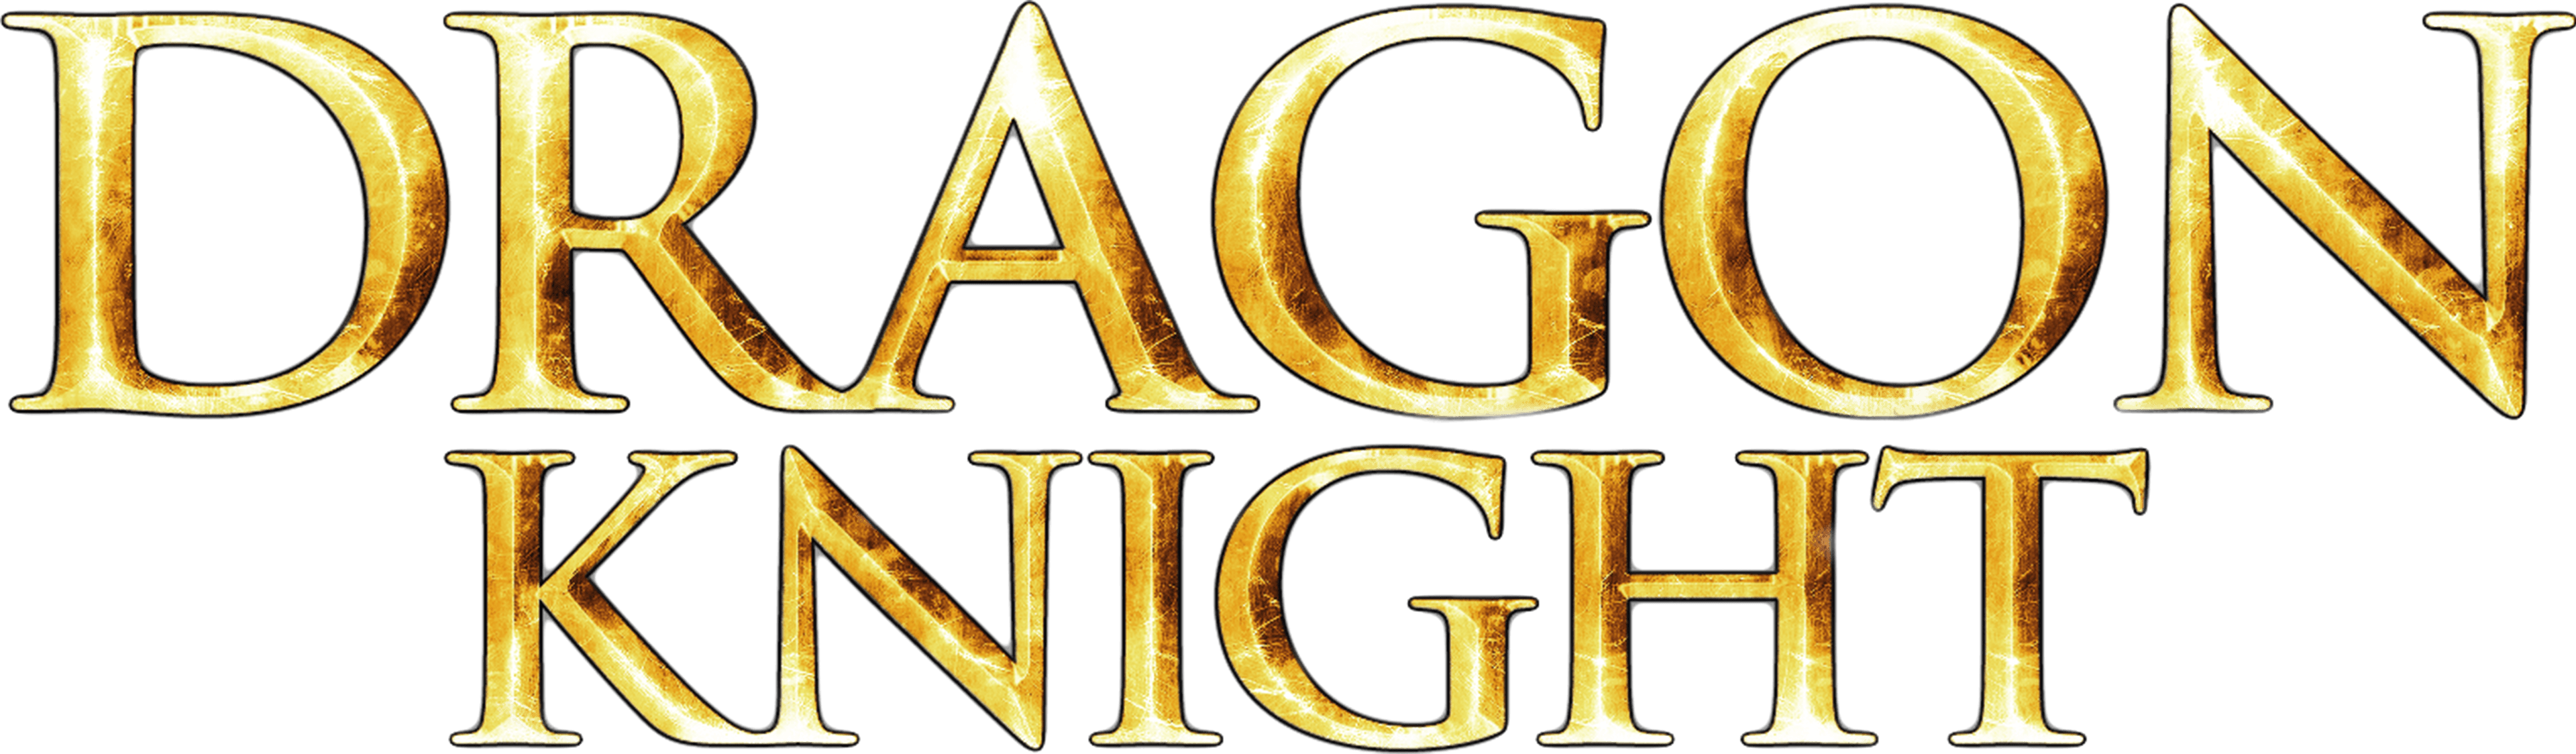 Dragon Knight logo